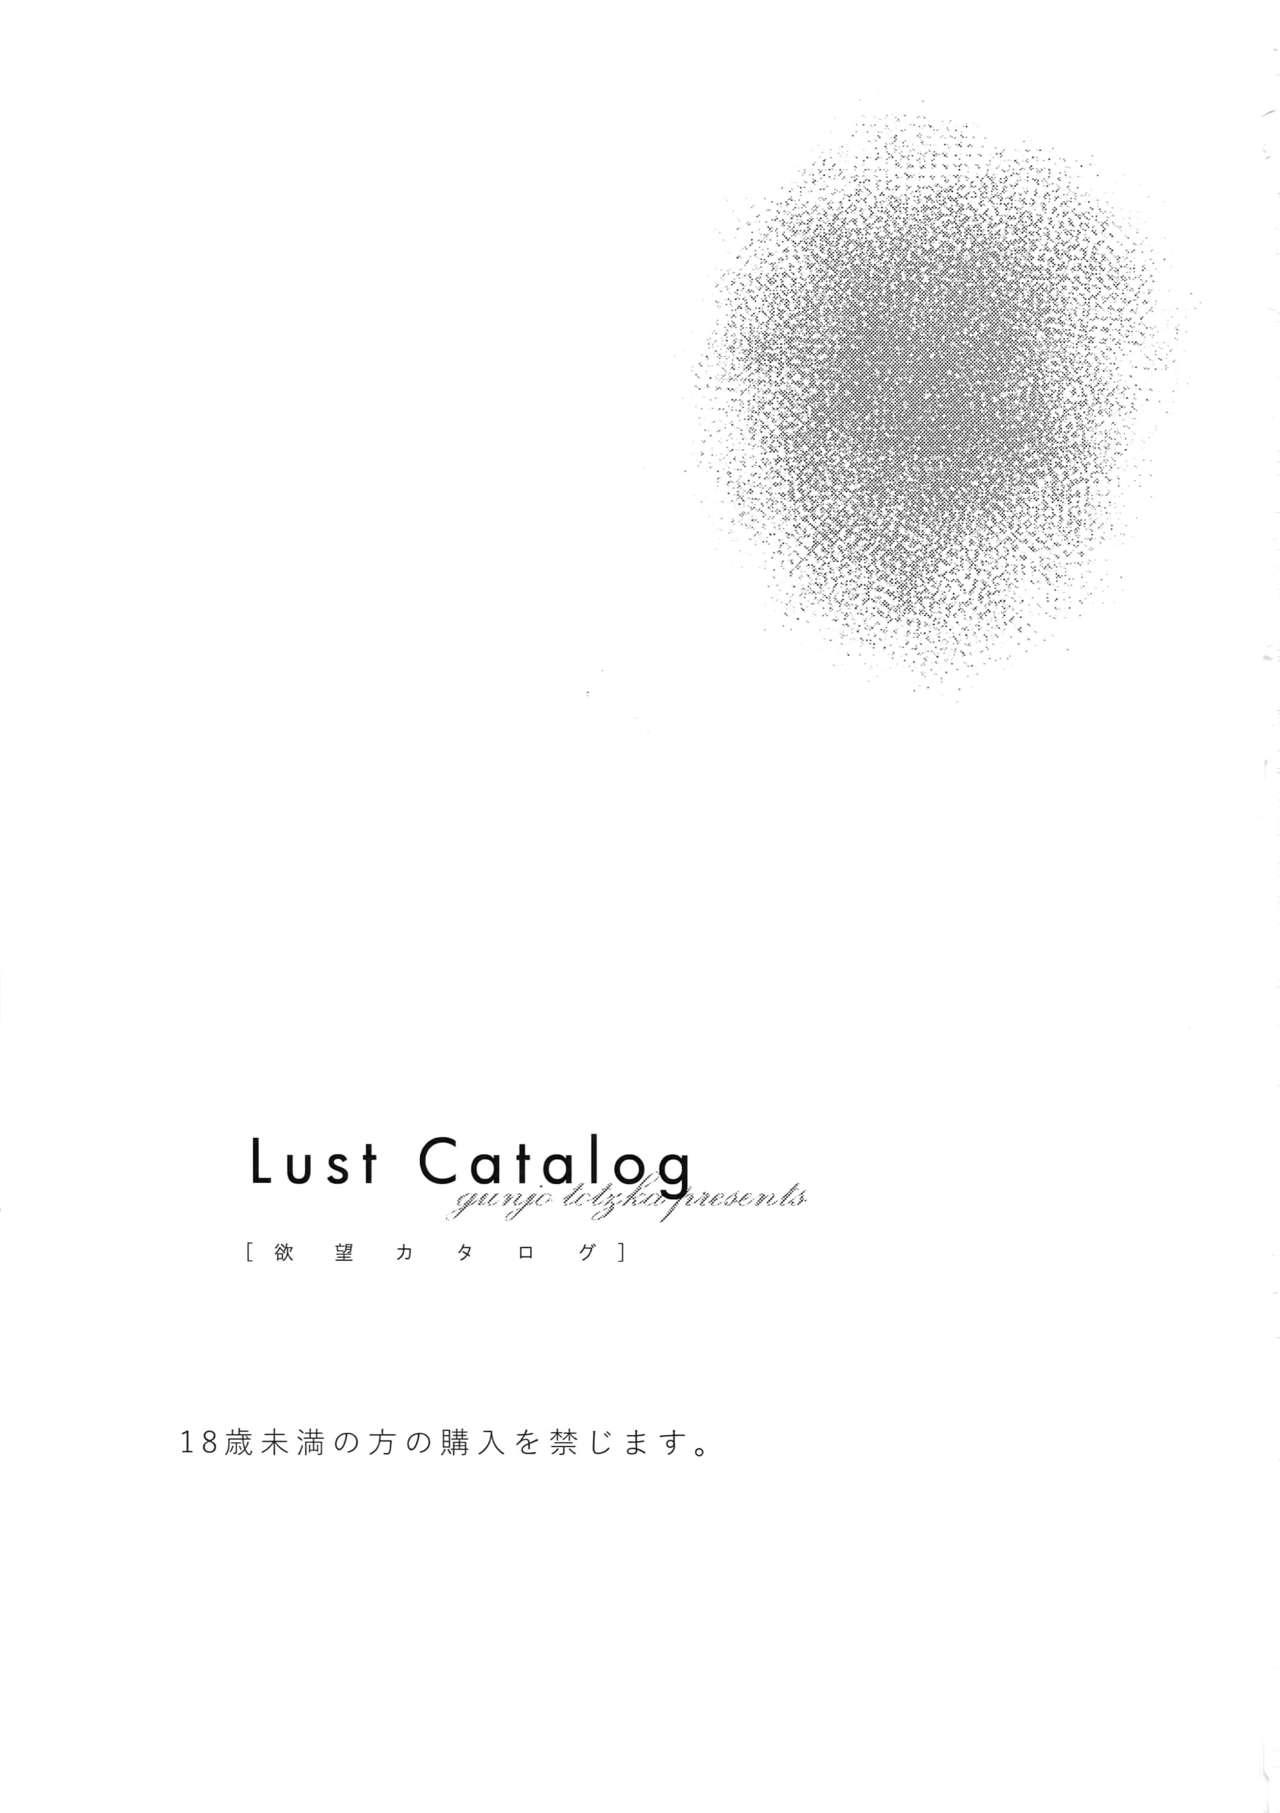 Piercings Yokubou Catalog - Lust Catalog - Original This - Page 2